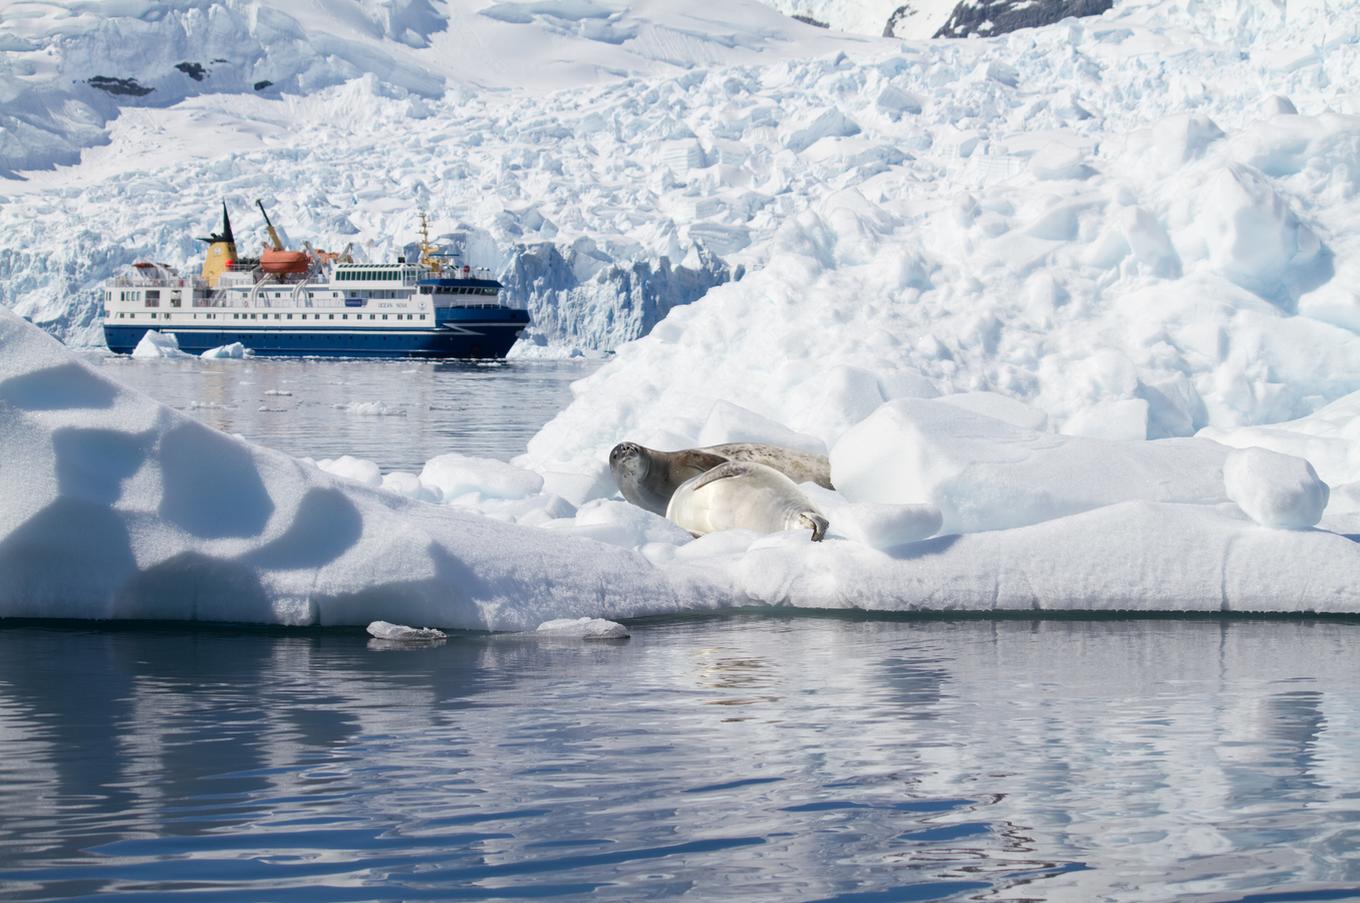 viaje lujo antártida aero crucero magellan explorer